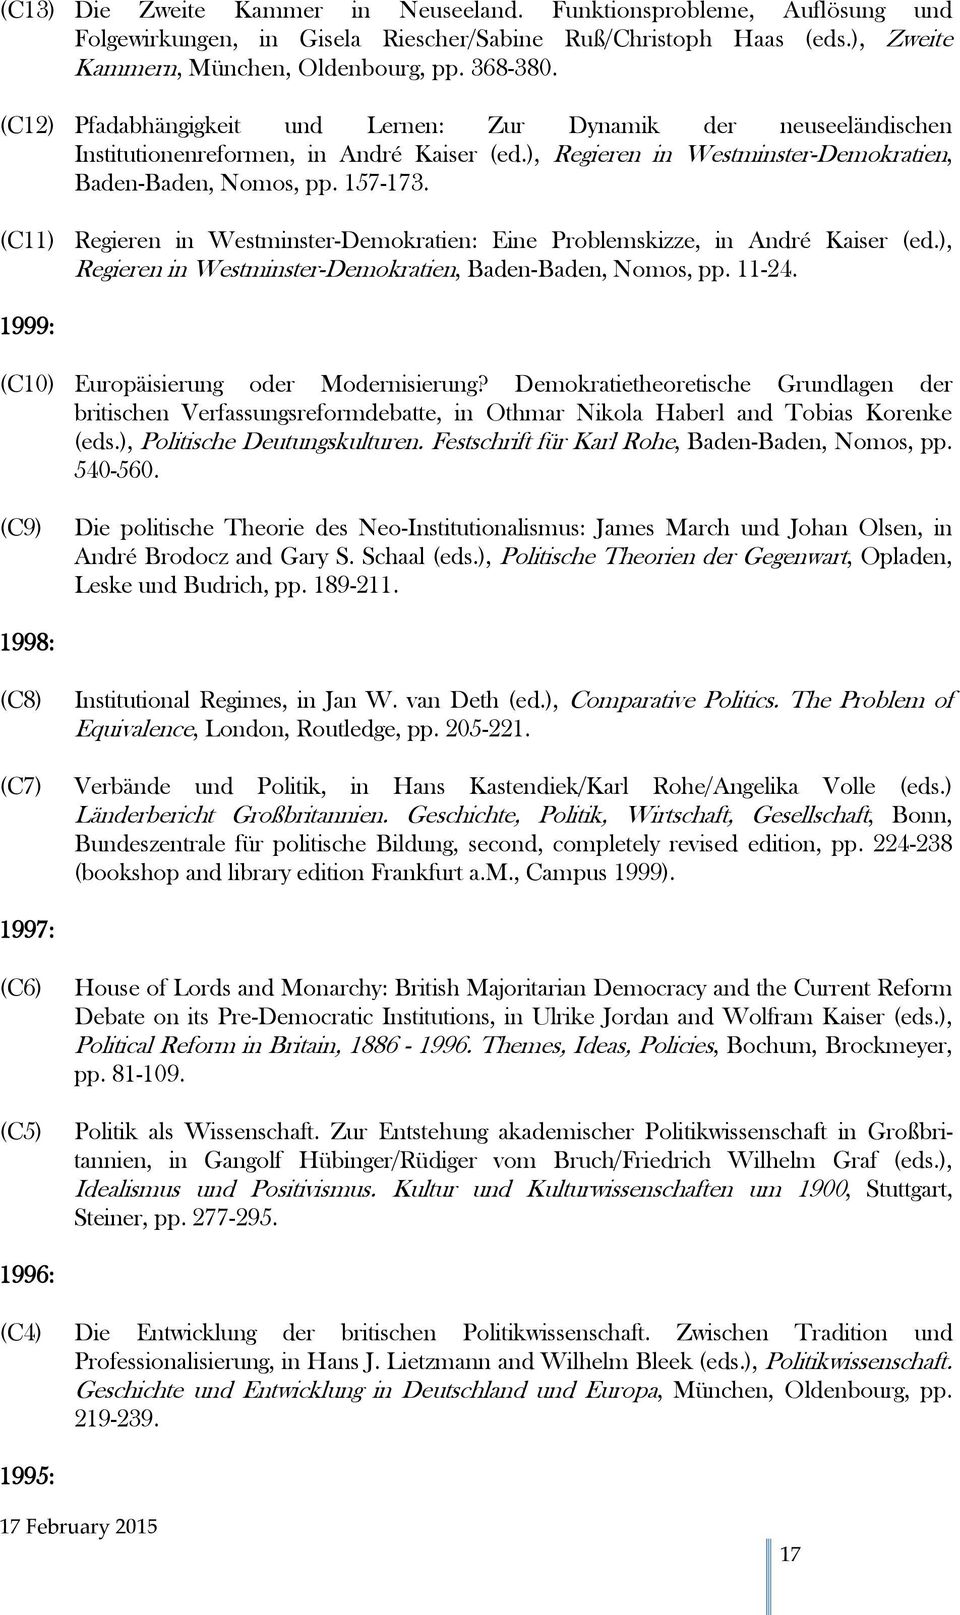 (C11) Regieren in Westminster-Demokratien: Eine Problemskizze, in André Kaiser (ed.), Regieren in Westminster-Demokratien, Baden-Baden, Nomos, pp. 11-24.